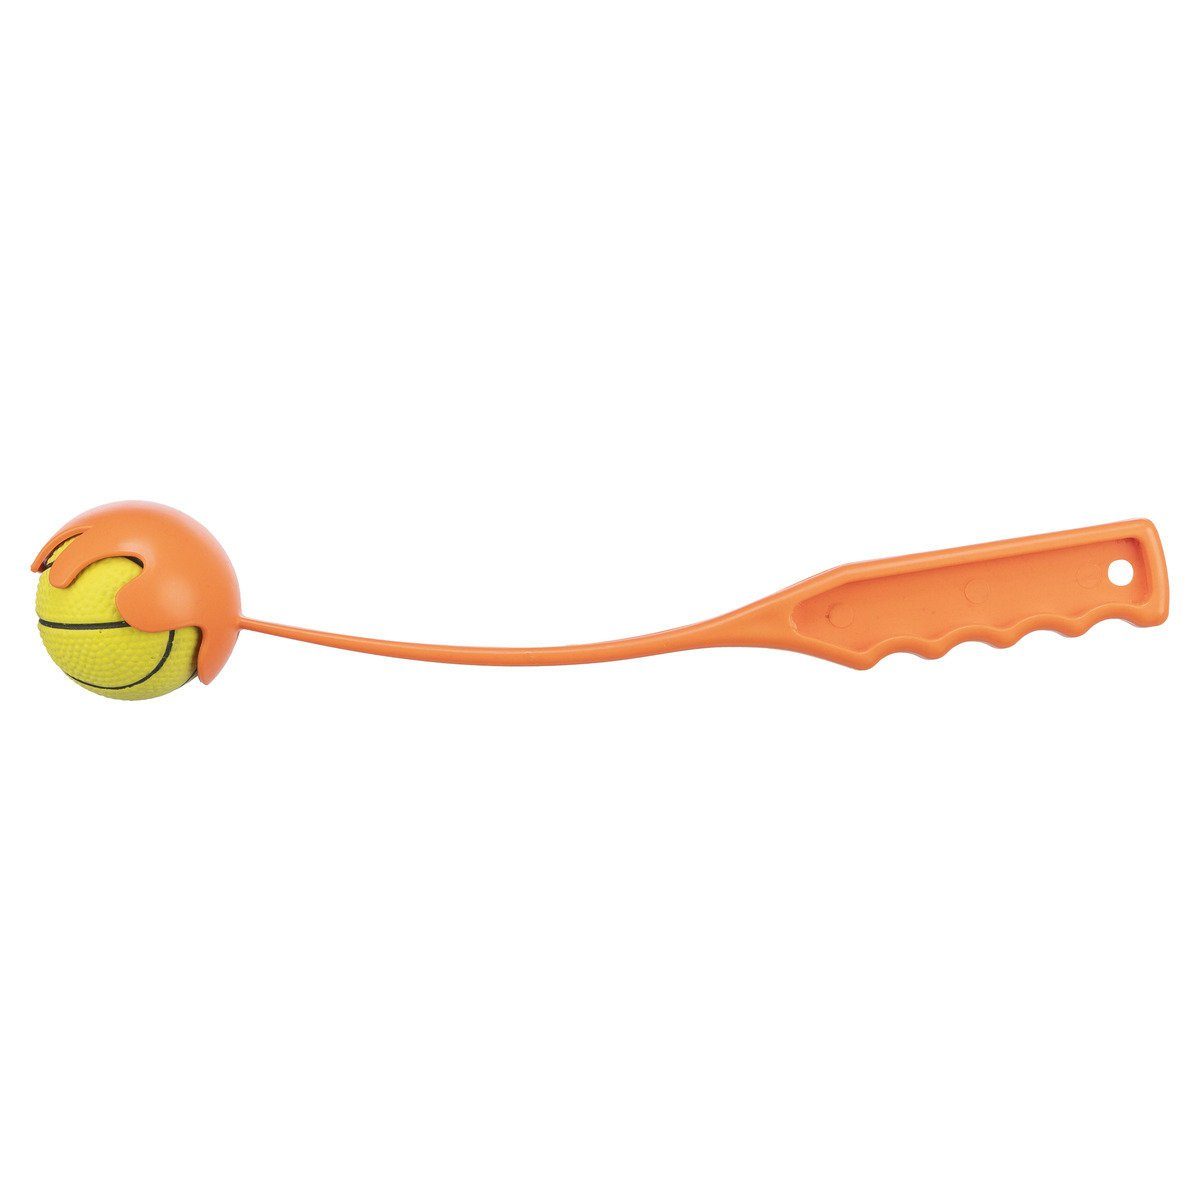 TRIXIE Outdoor-Spielzeug Ballschleuder mit Ball V1, Maße: 30 cm / ø 6 cm / passende Ersatzbälle: ankfs-31763, ankfs-16086, ankfs-16092, ankfs-16091 / Farbe: orange/lime